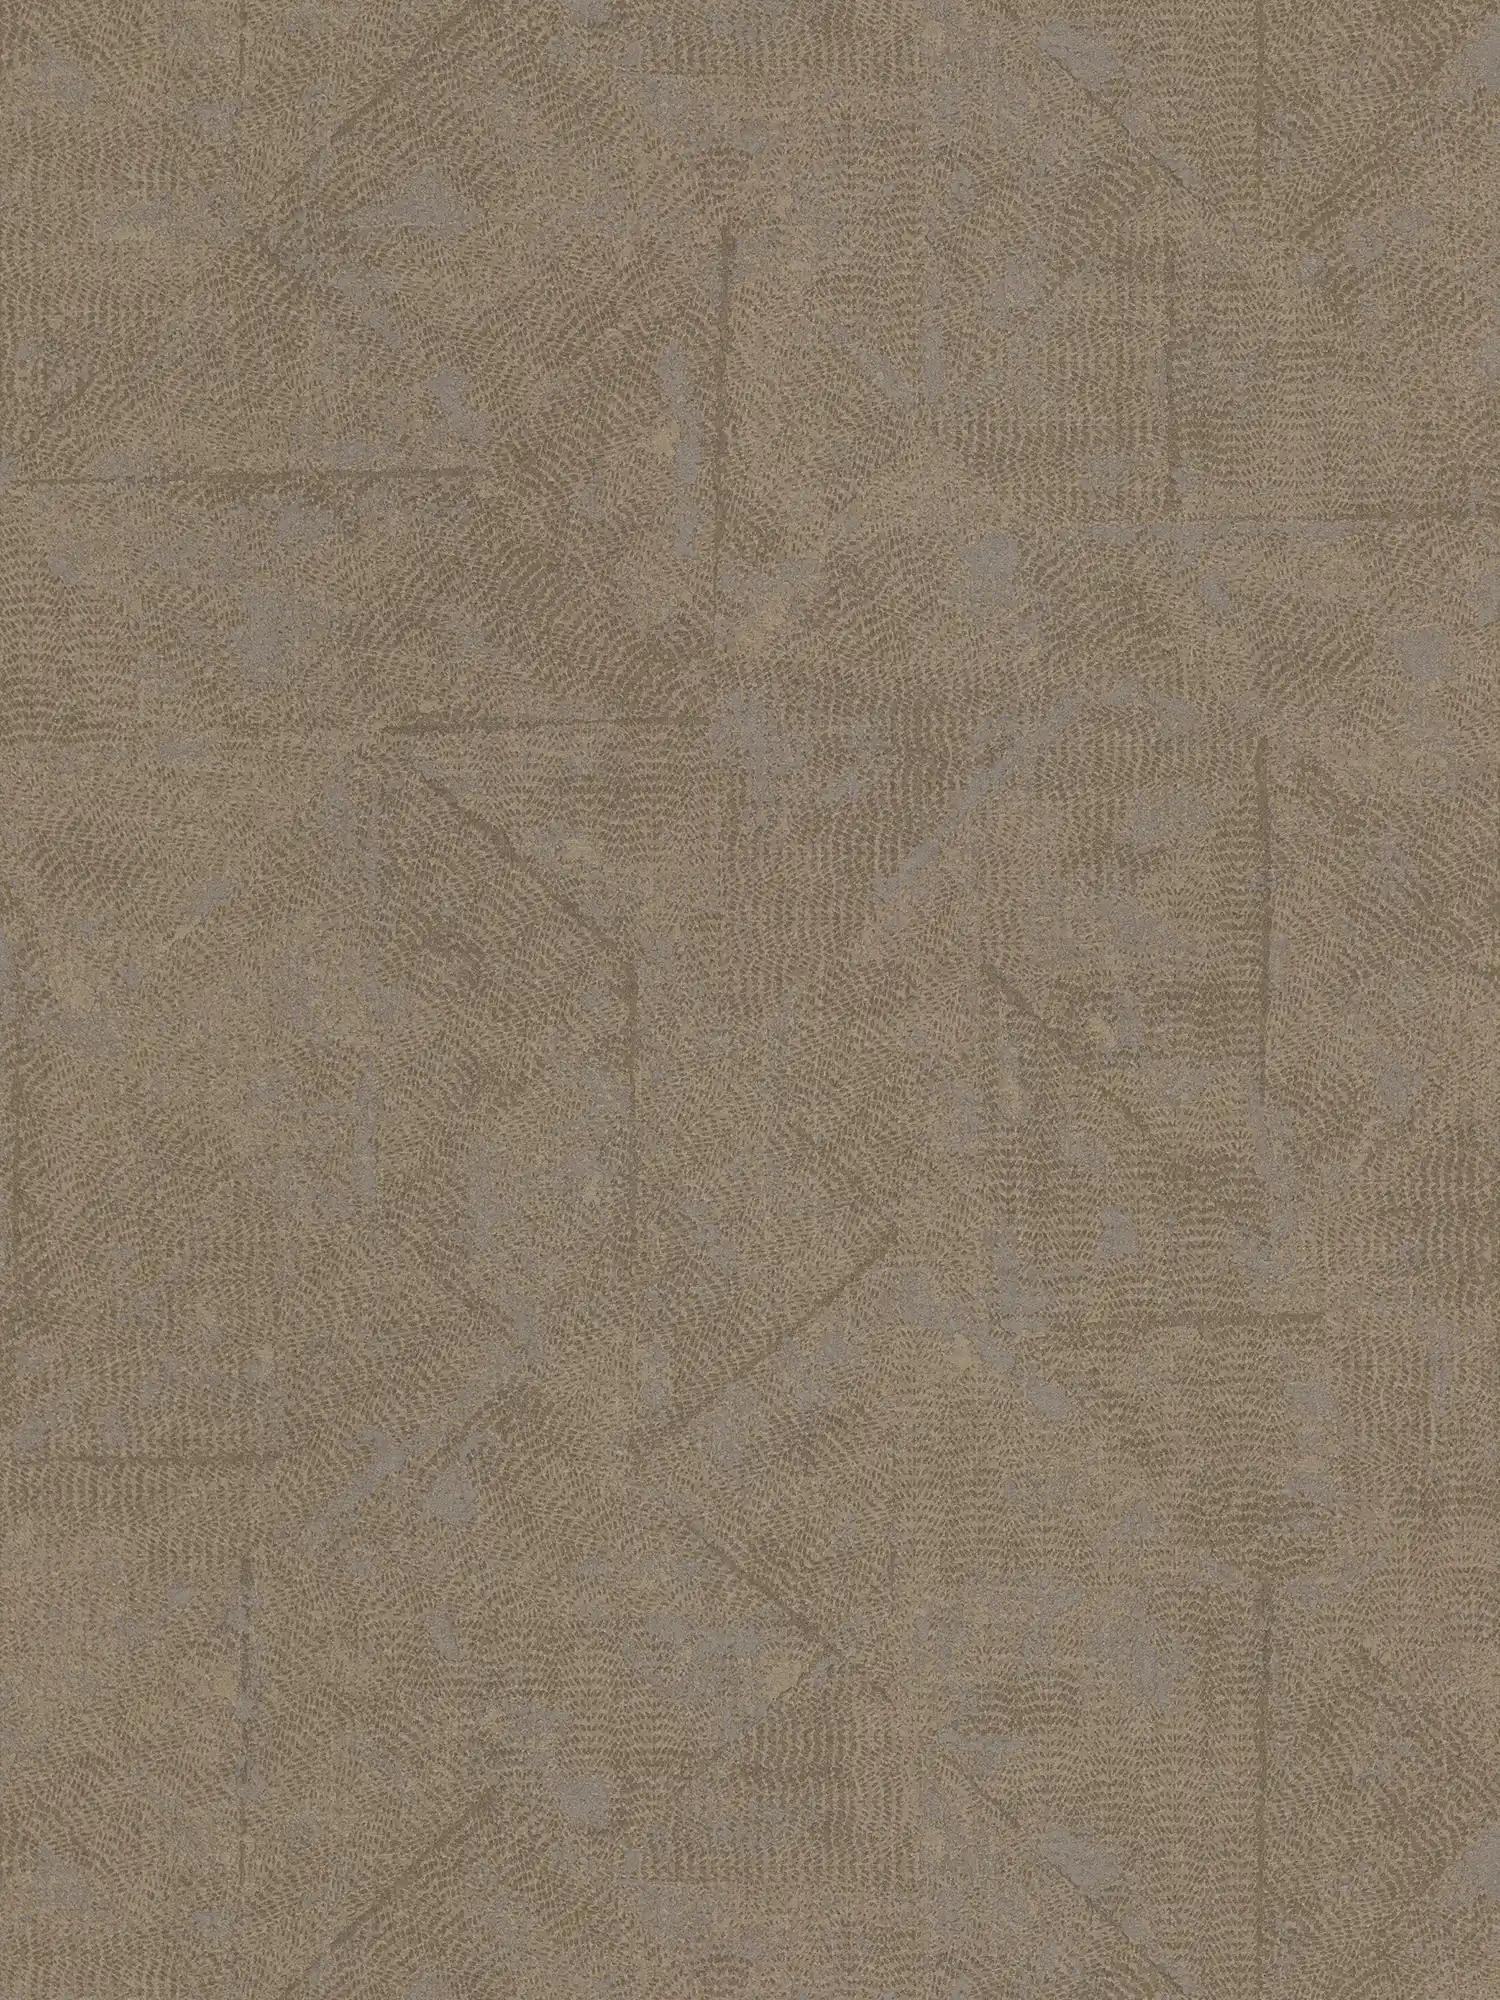 Wallpaper Mediterranean style, patterned - brown, bronze, grey
